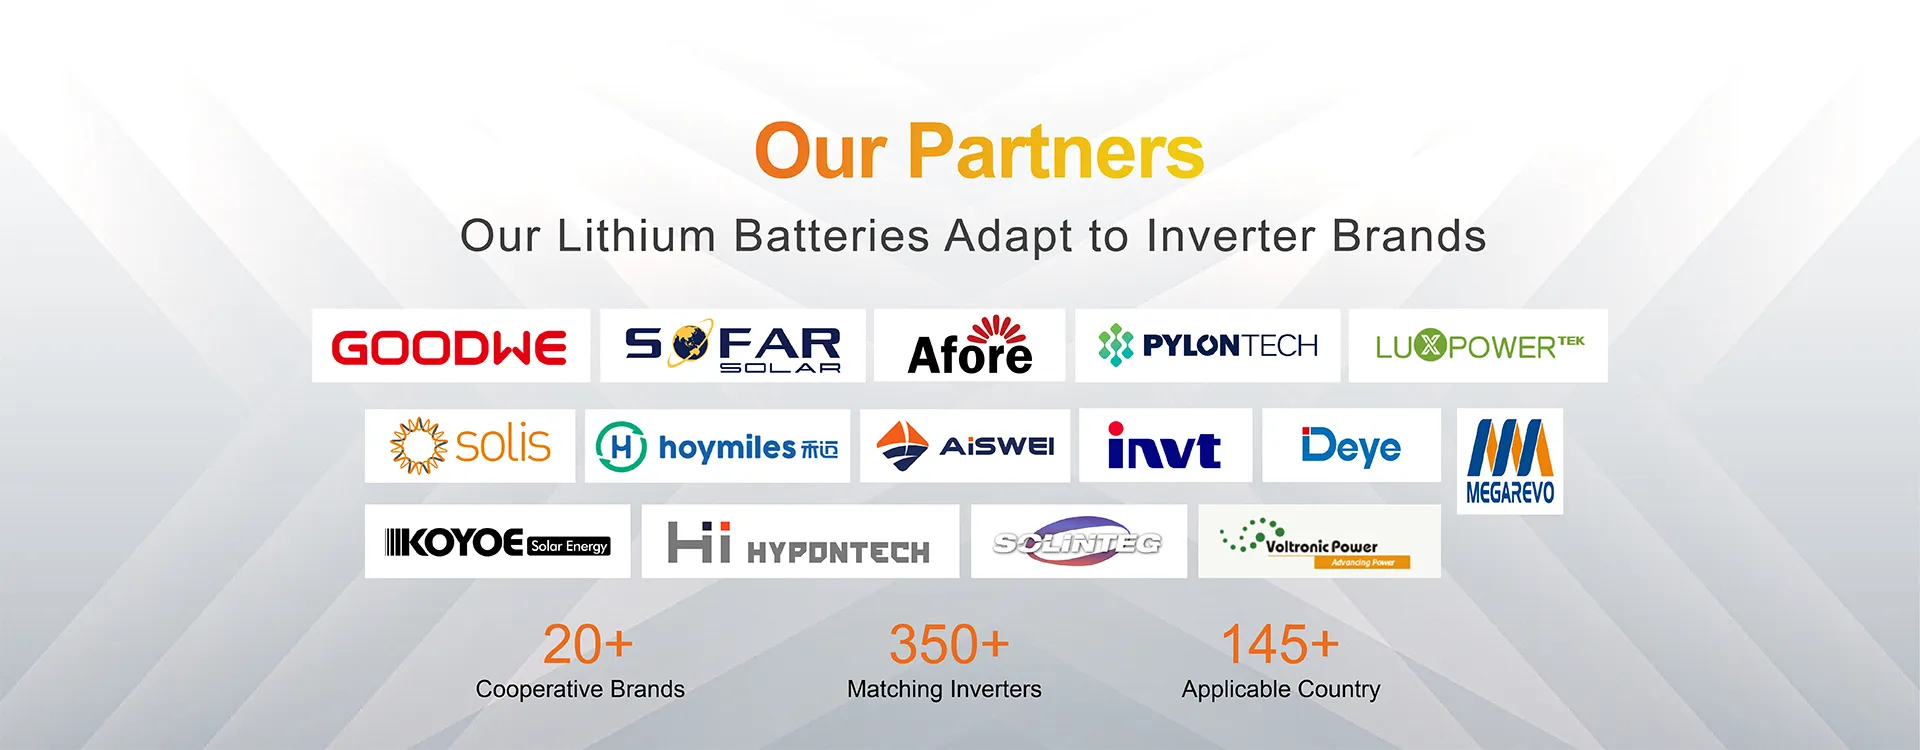 Lithium Batteries Adapt to Inverter